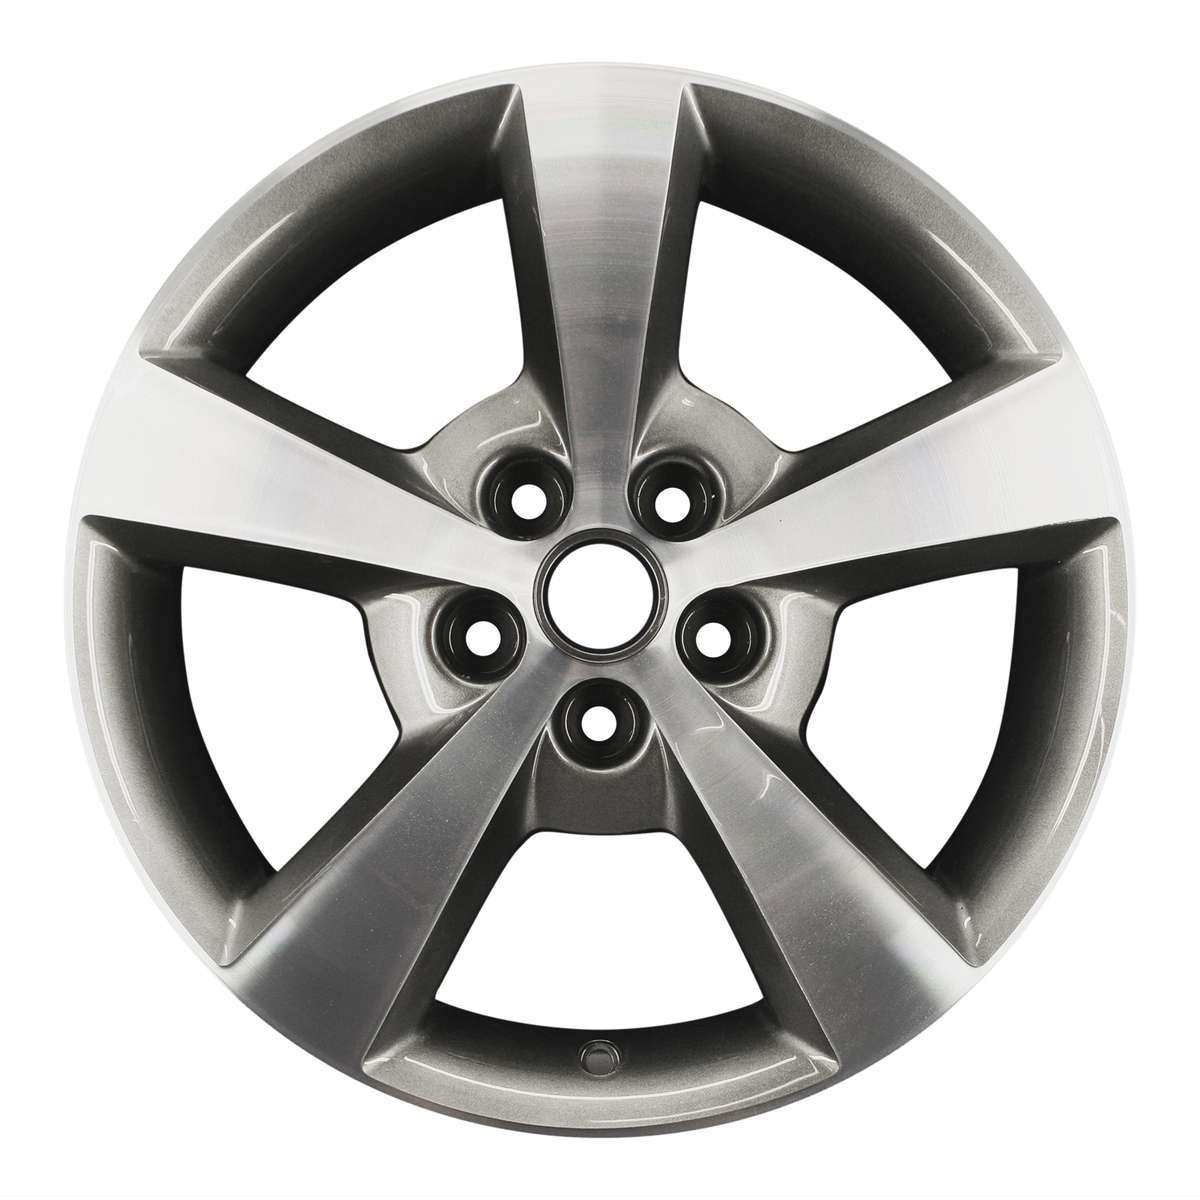 2011 Chevrolet Malibu 17" OEM Wheel Rim W5334MC